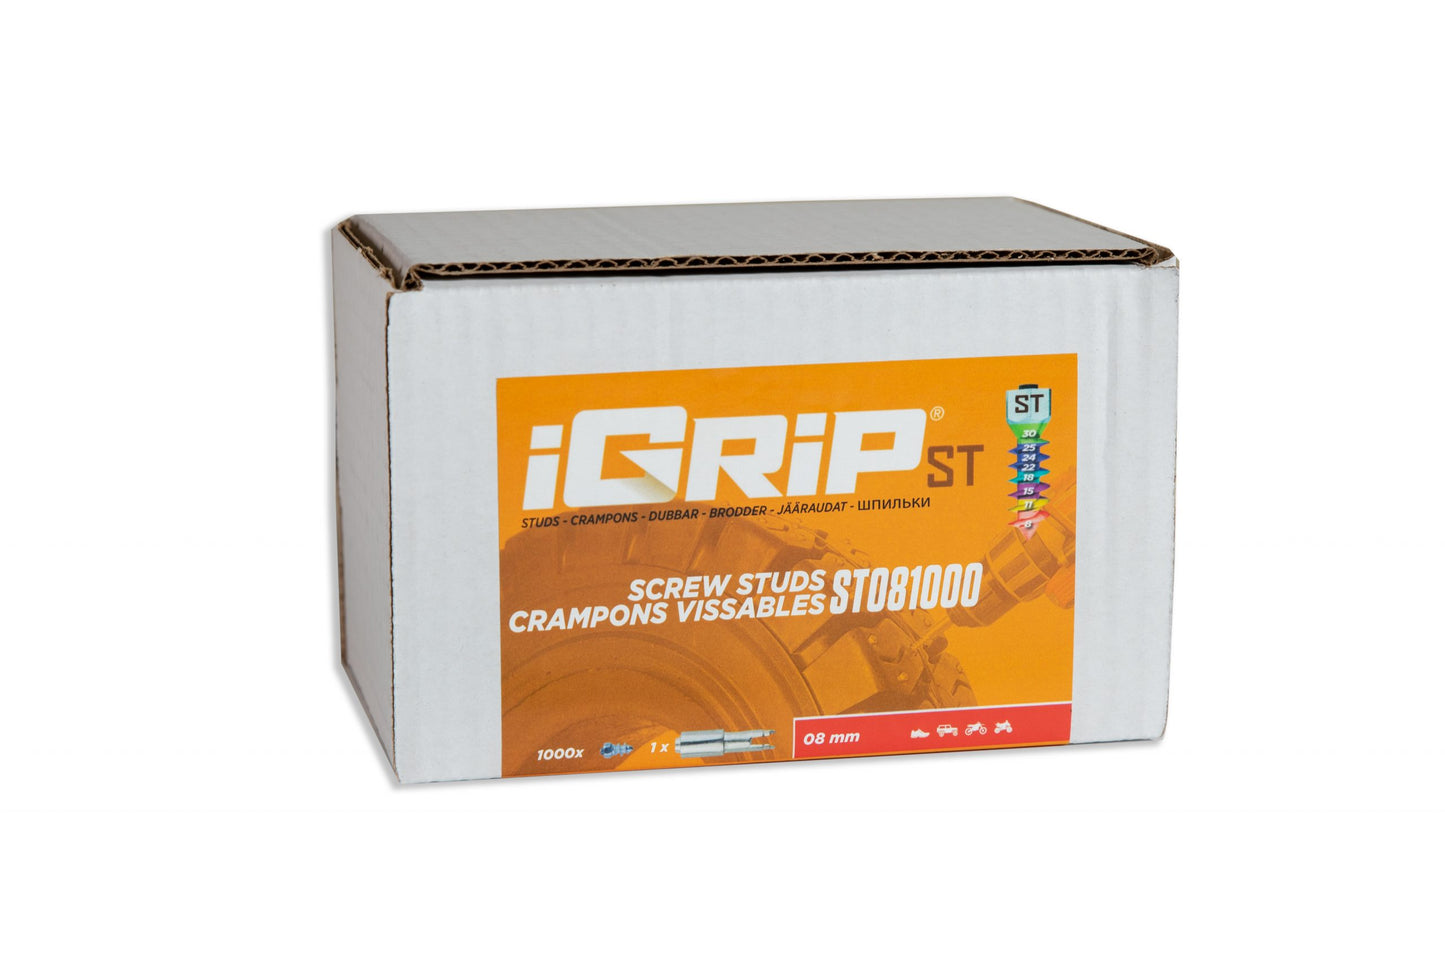 Crampons standard ST-08 iGrip